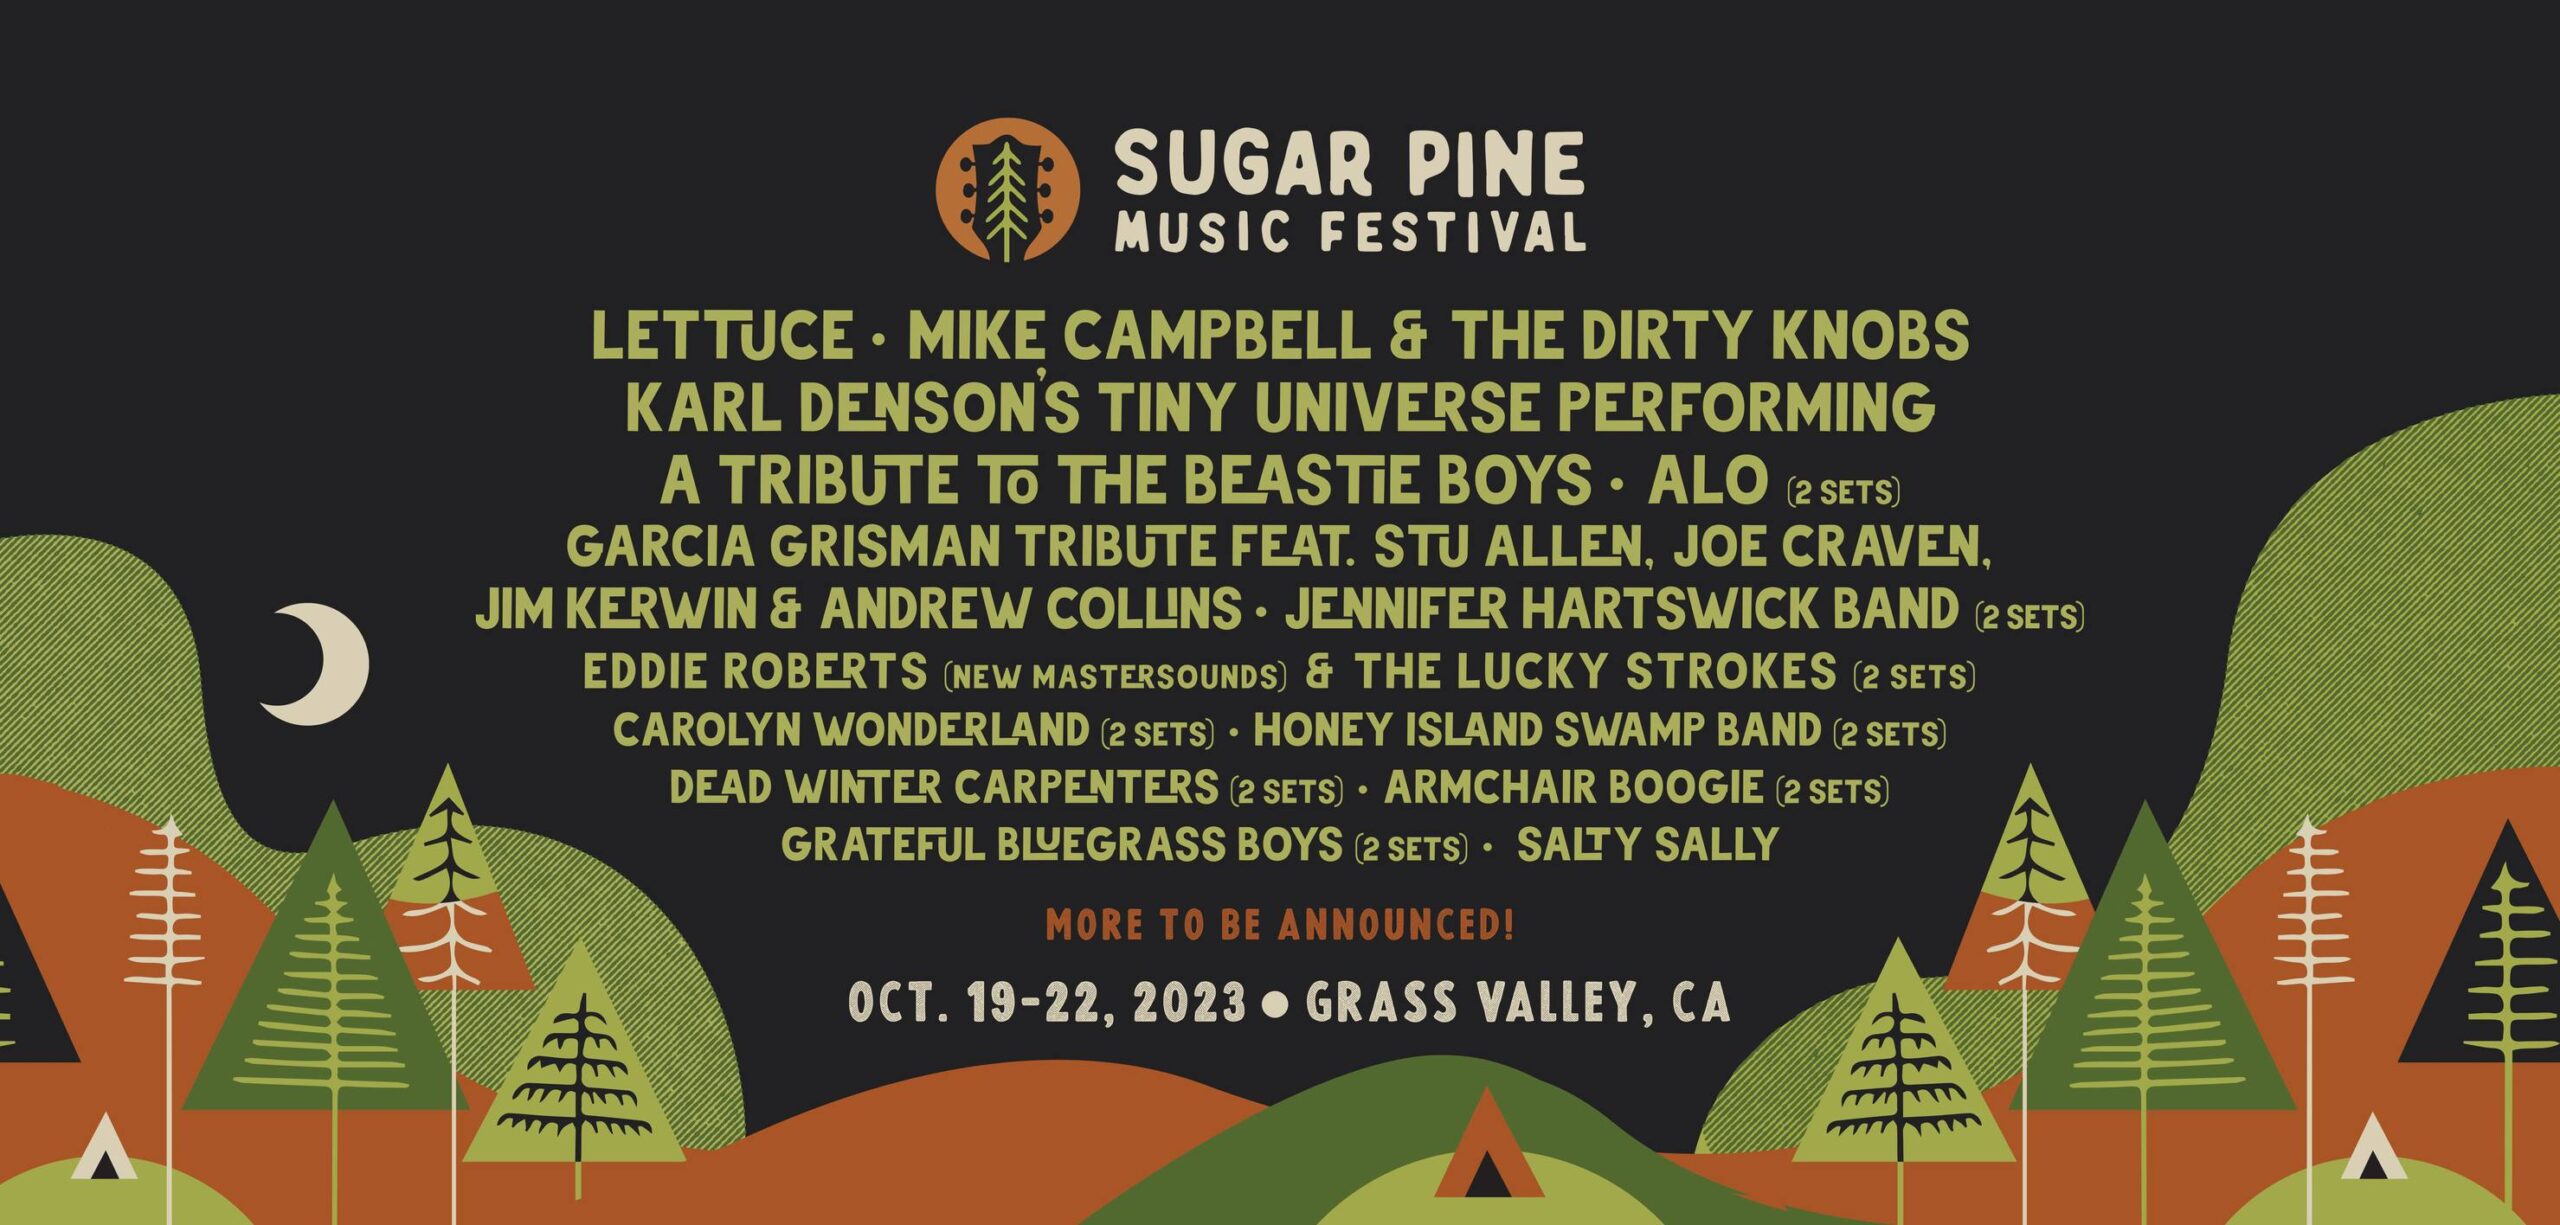 Sugar Pine Music Festival Outlines Initial 2023 Artist Lineup Lettuce